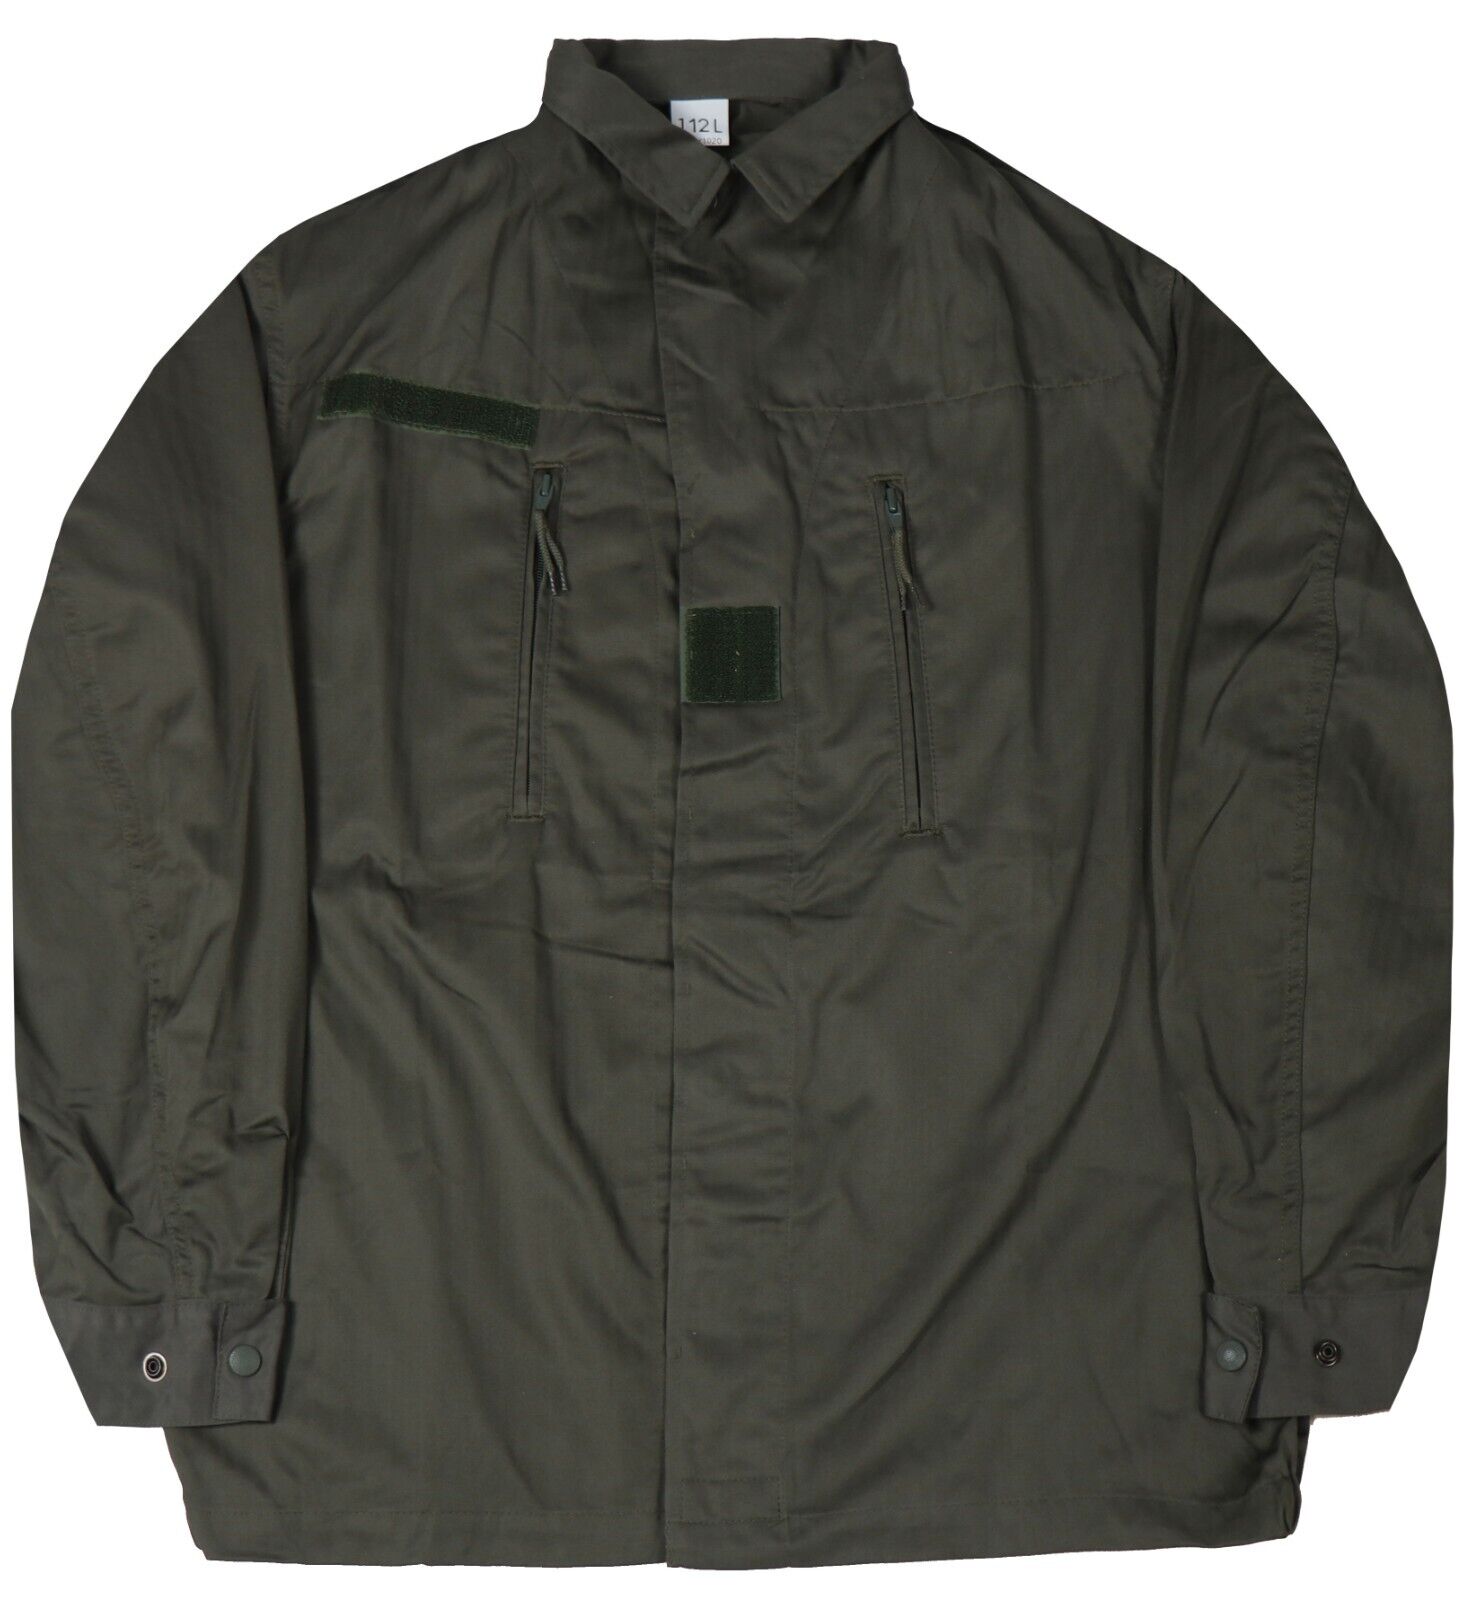 XXLarge (120) - French Military F2 Field Jacket Olive Green CCE Coat Uniform